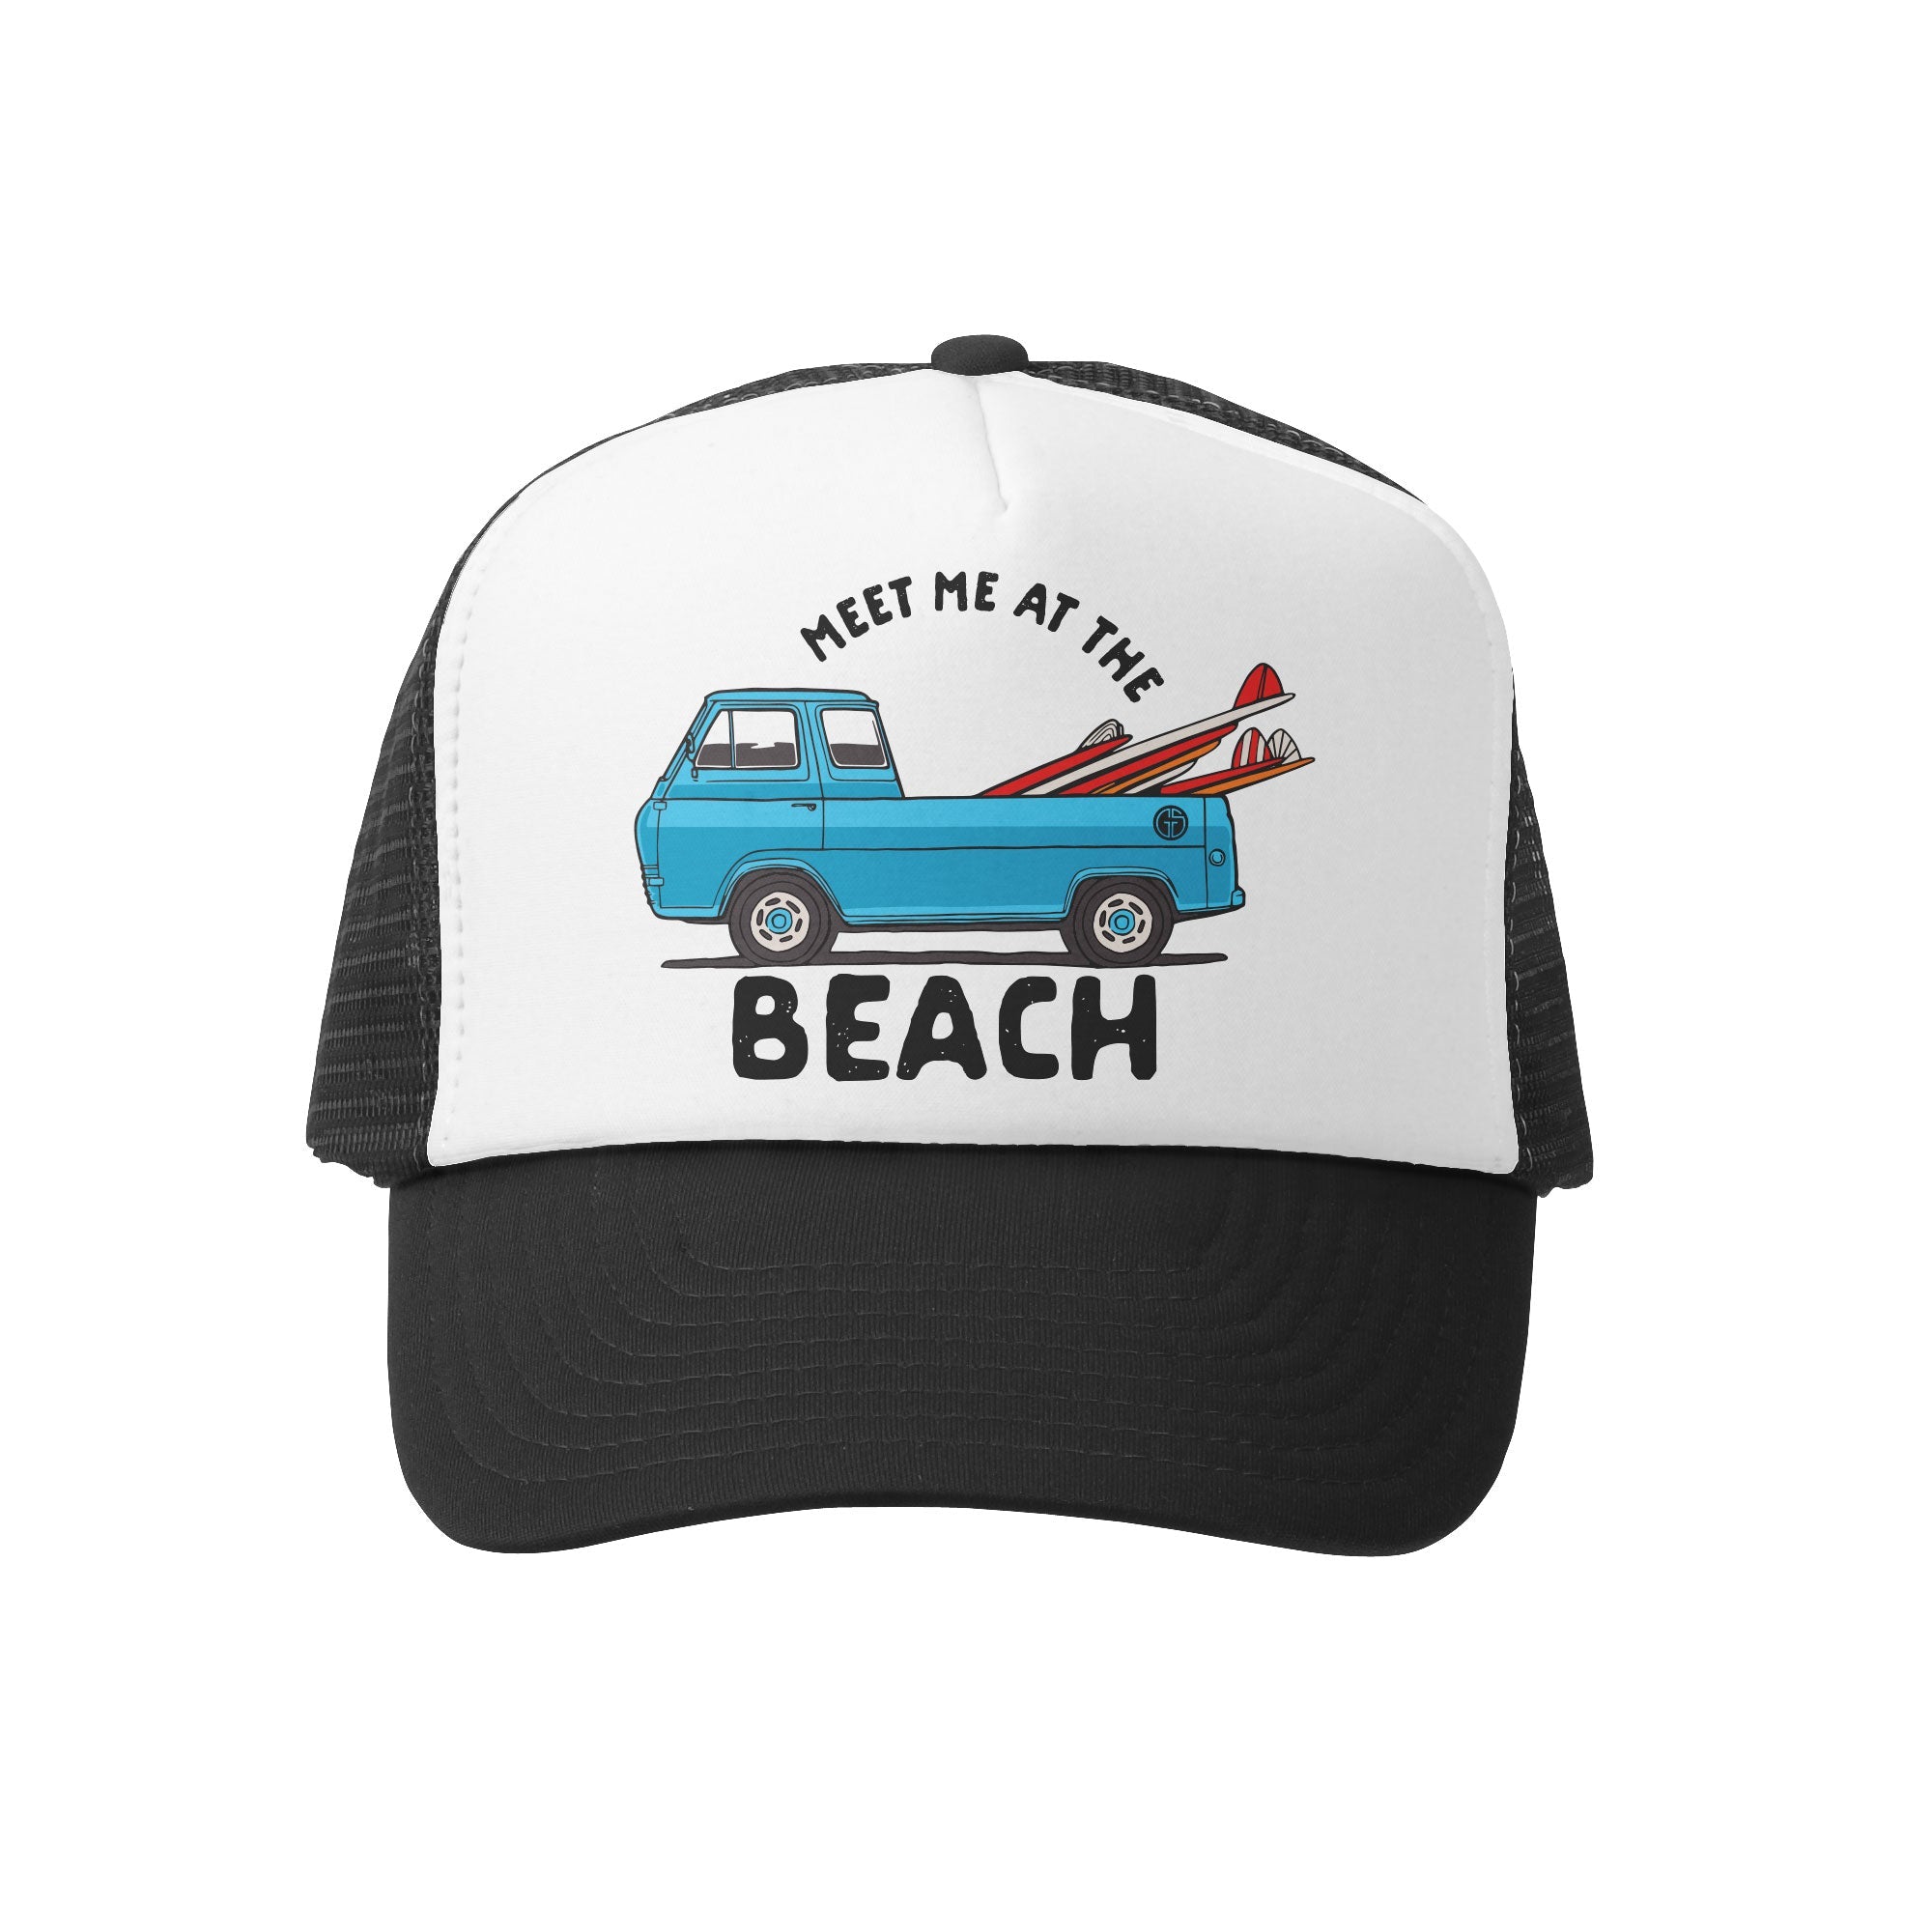 Grom Squad Meet Me At The Beach Trucker Hat Black/White Mini